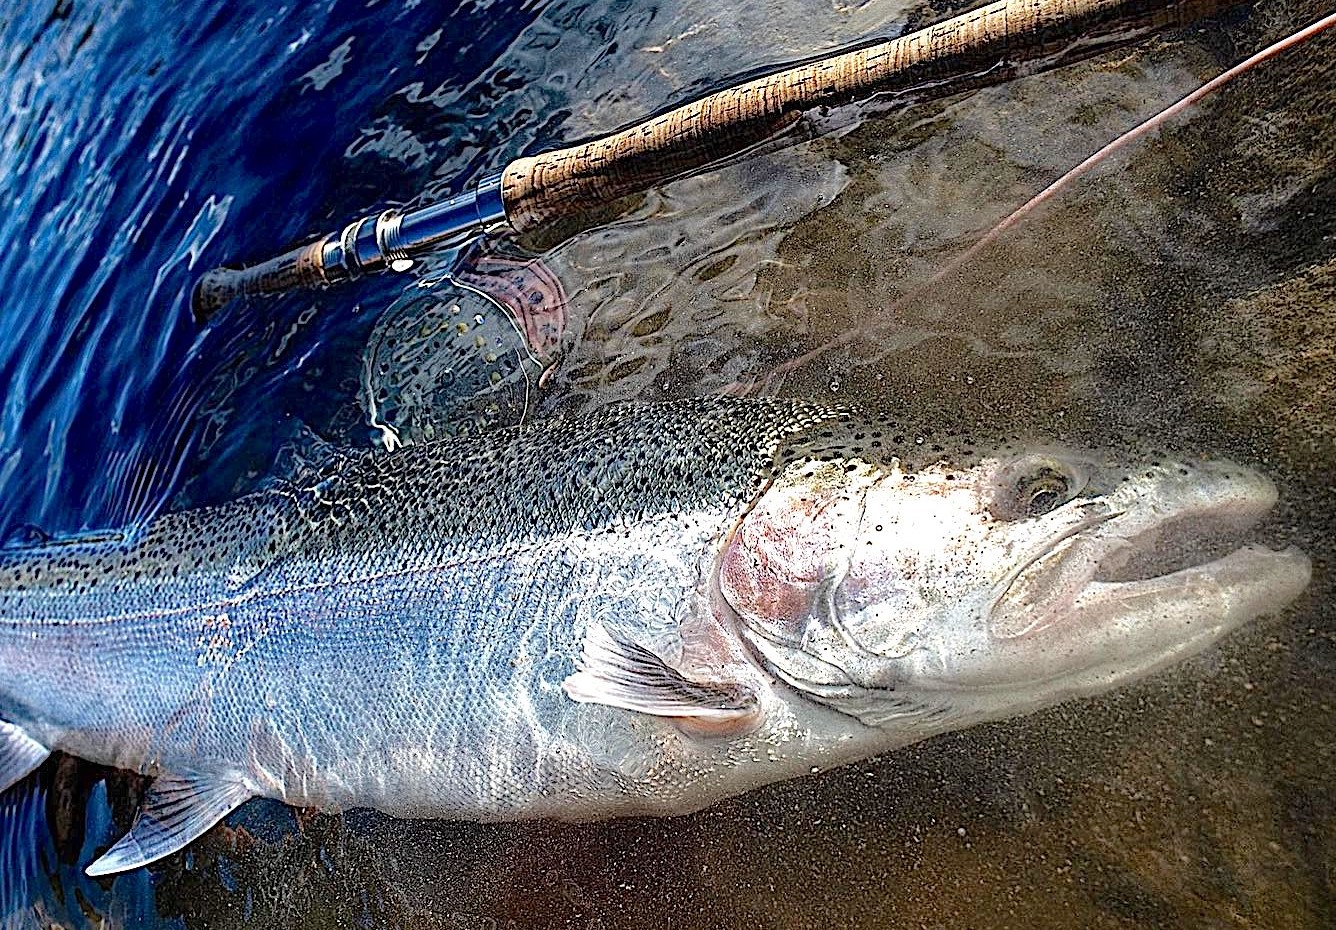 Walleye bite is on, weather favors trout runs: NE Ohio fishing